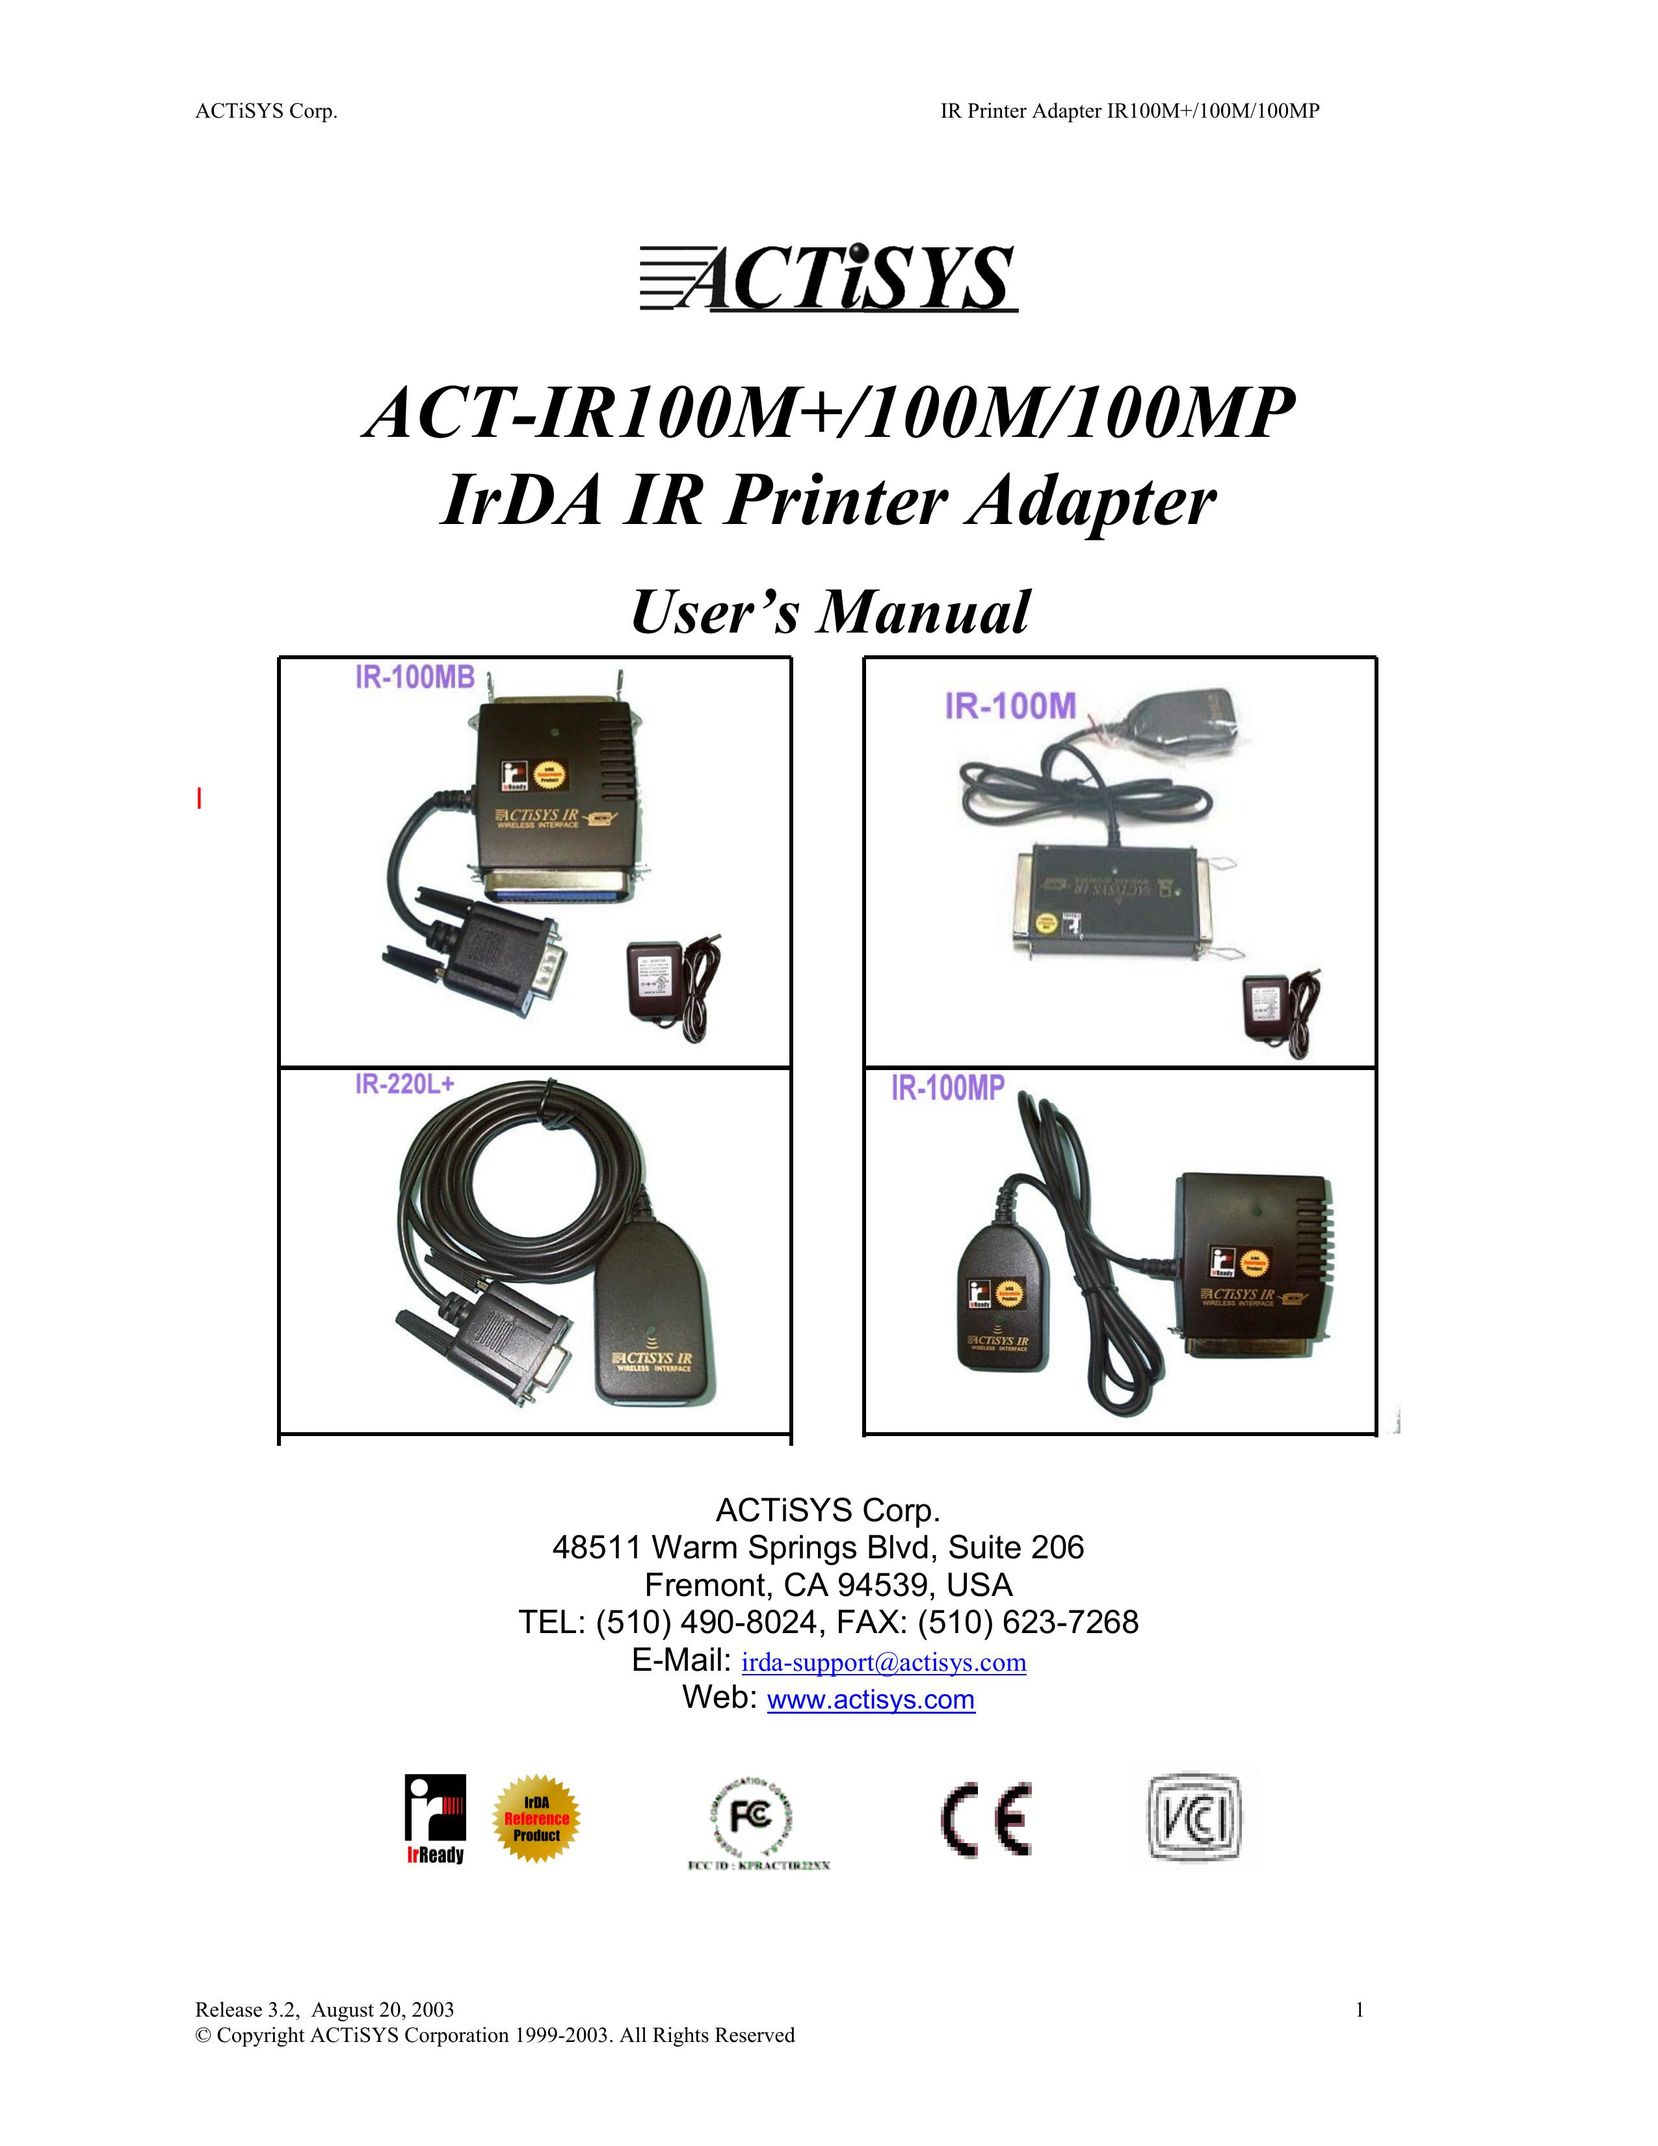 ACTiSYS ACT-IR100M Network Card User Manual